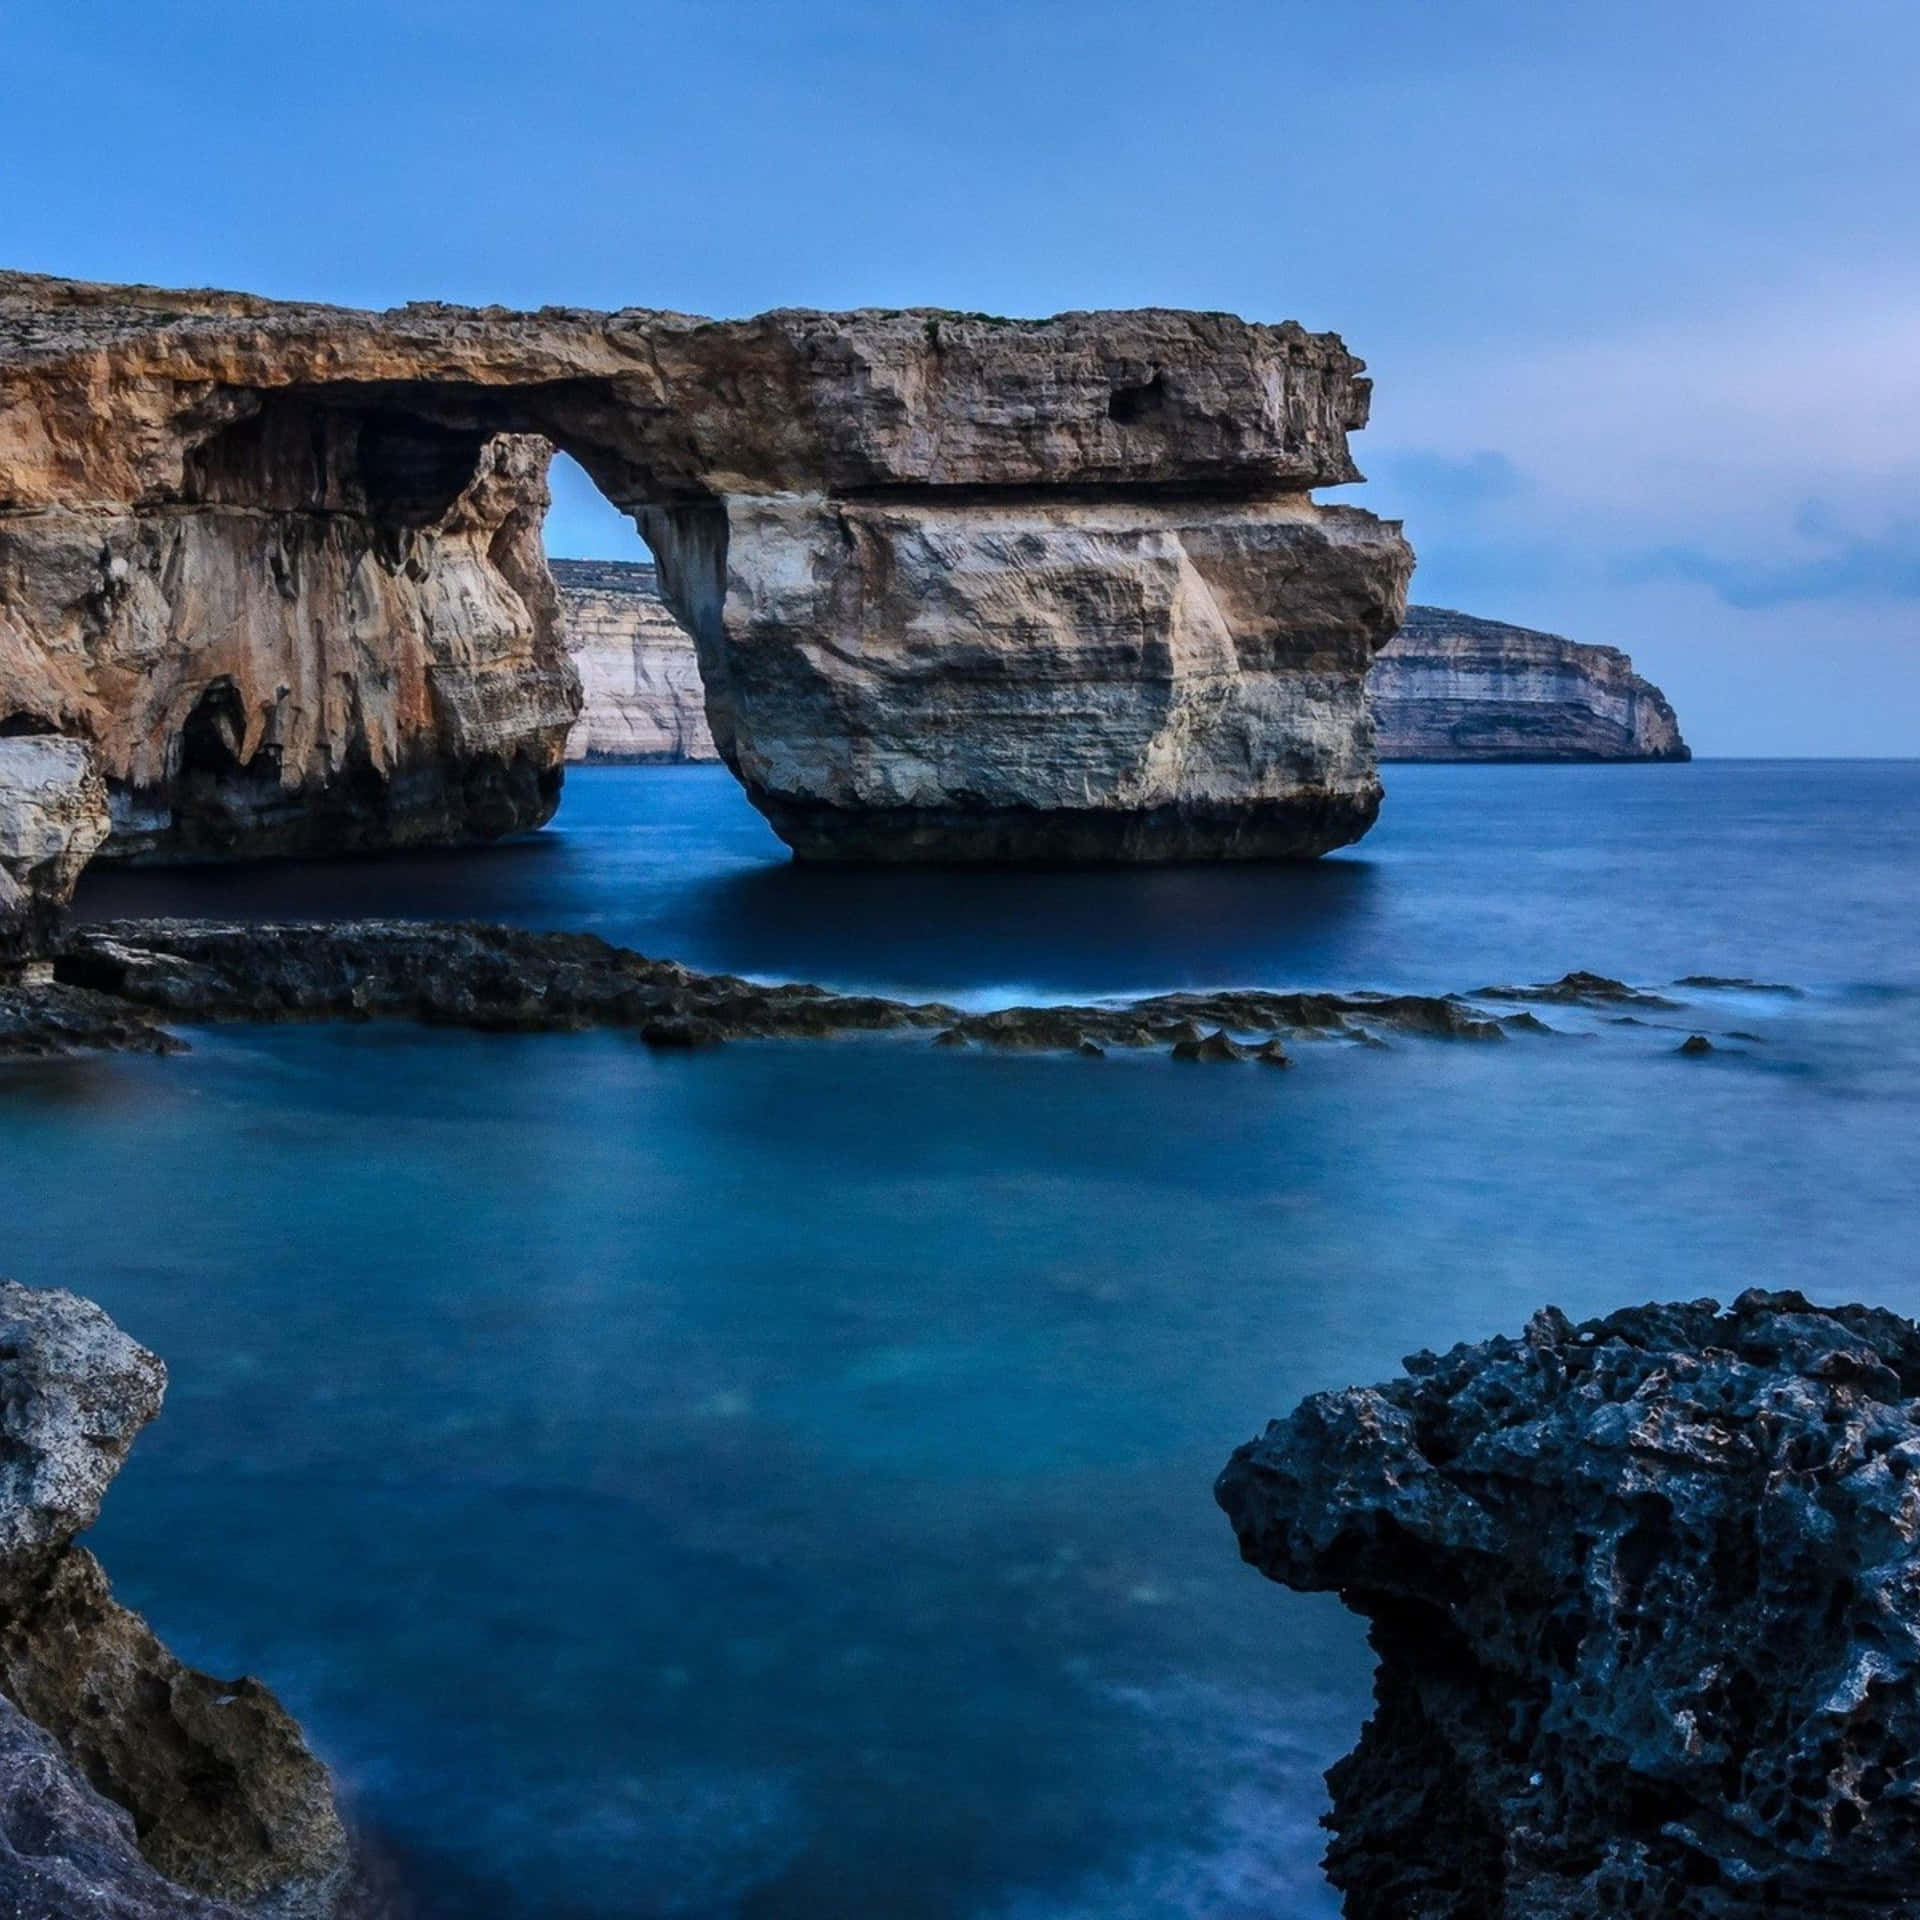 Stunning landscape of Malta coastline